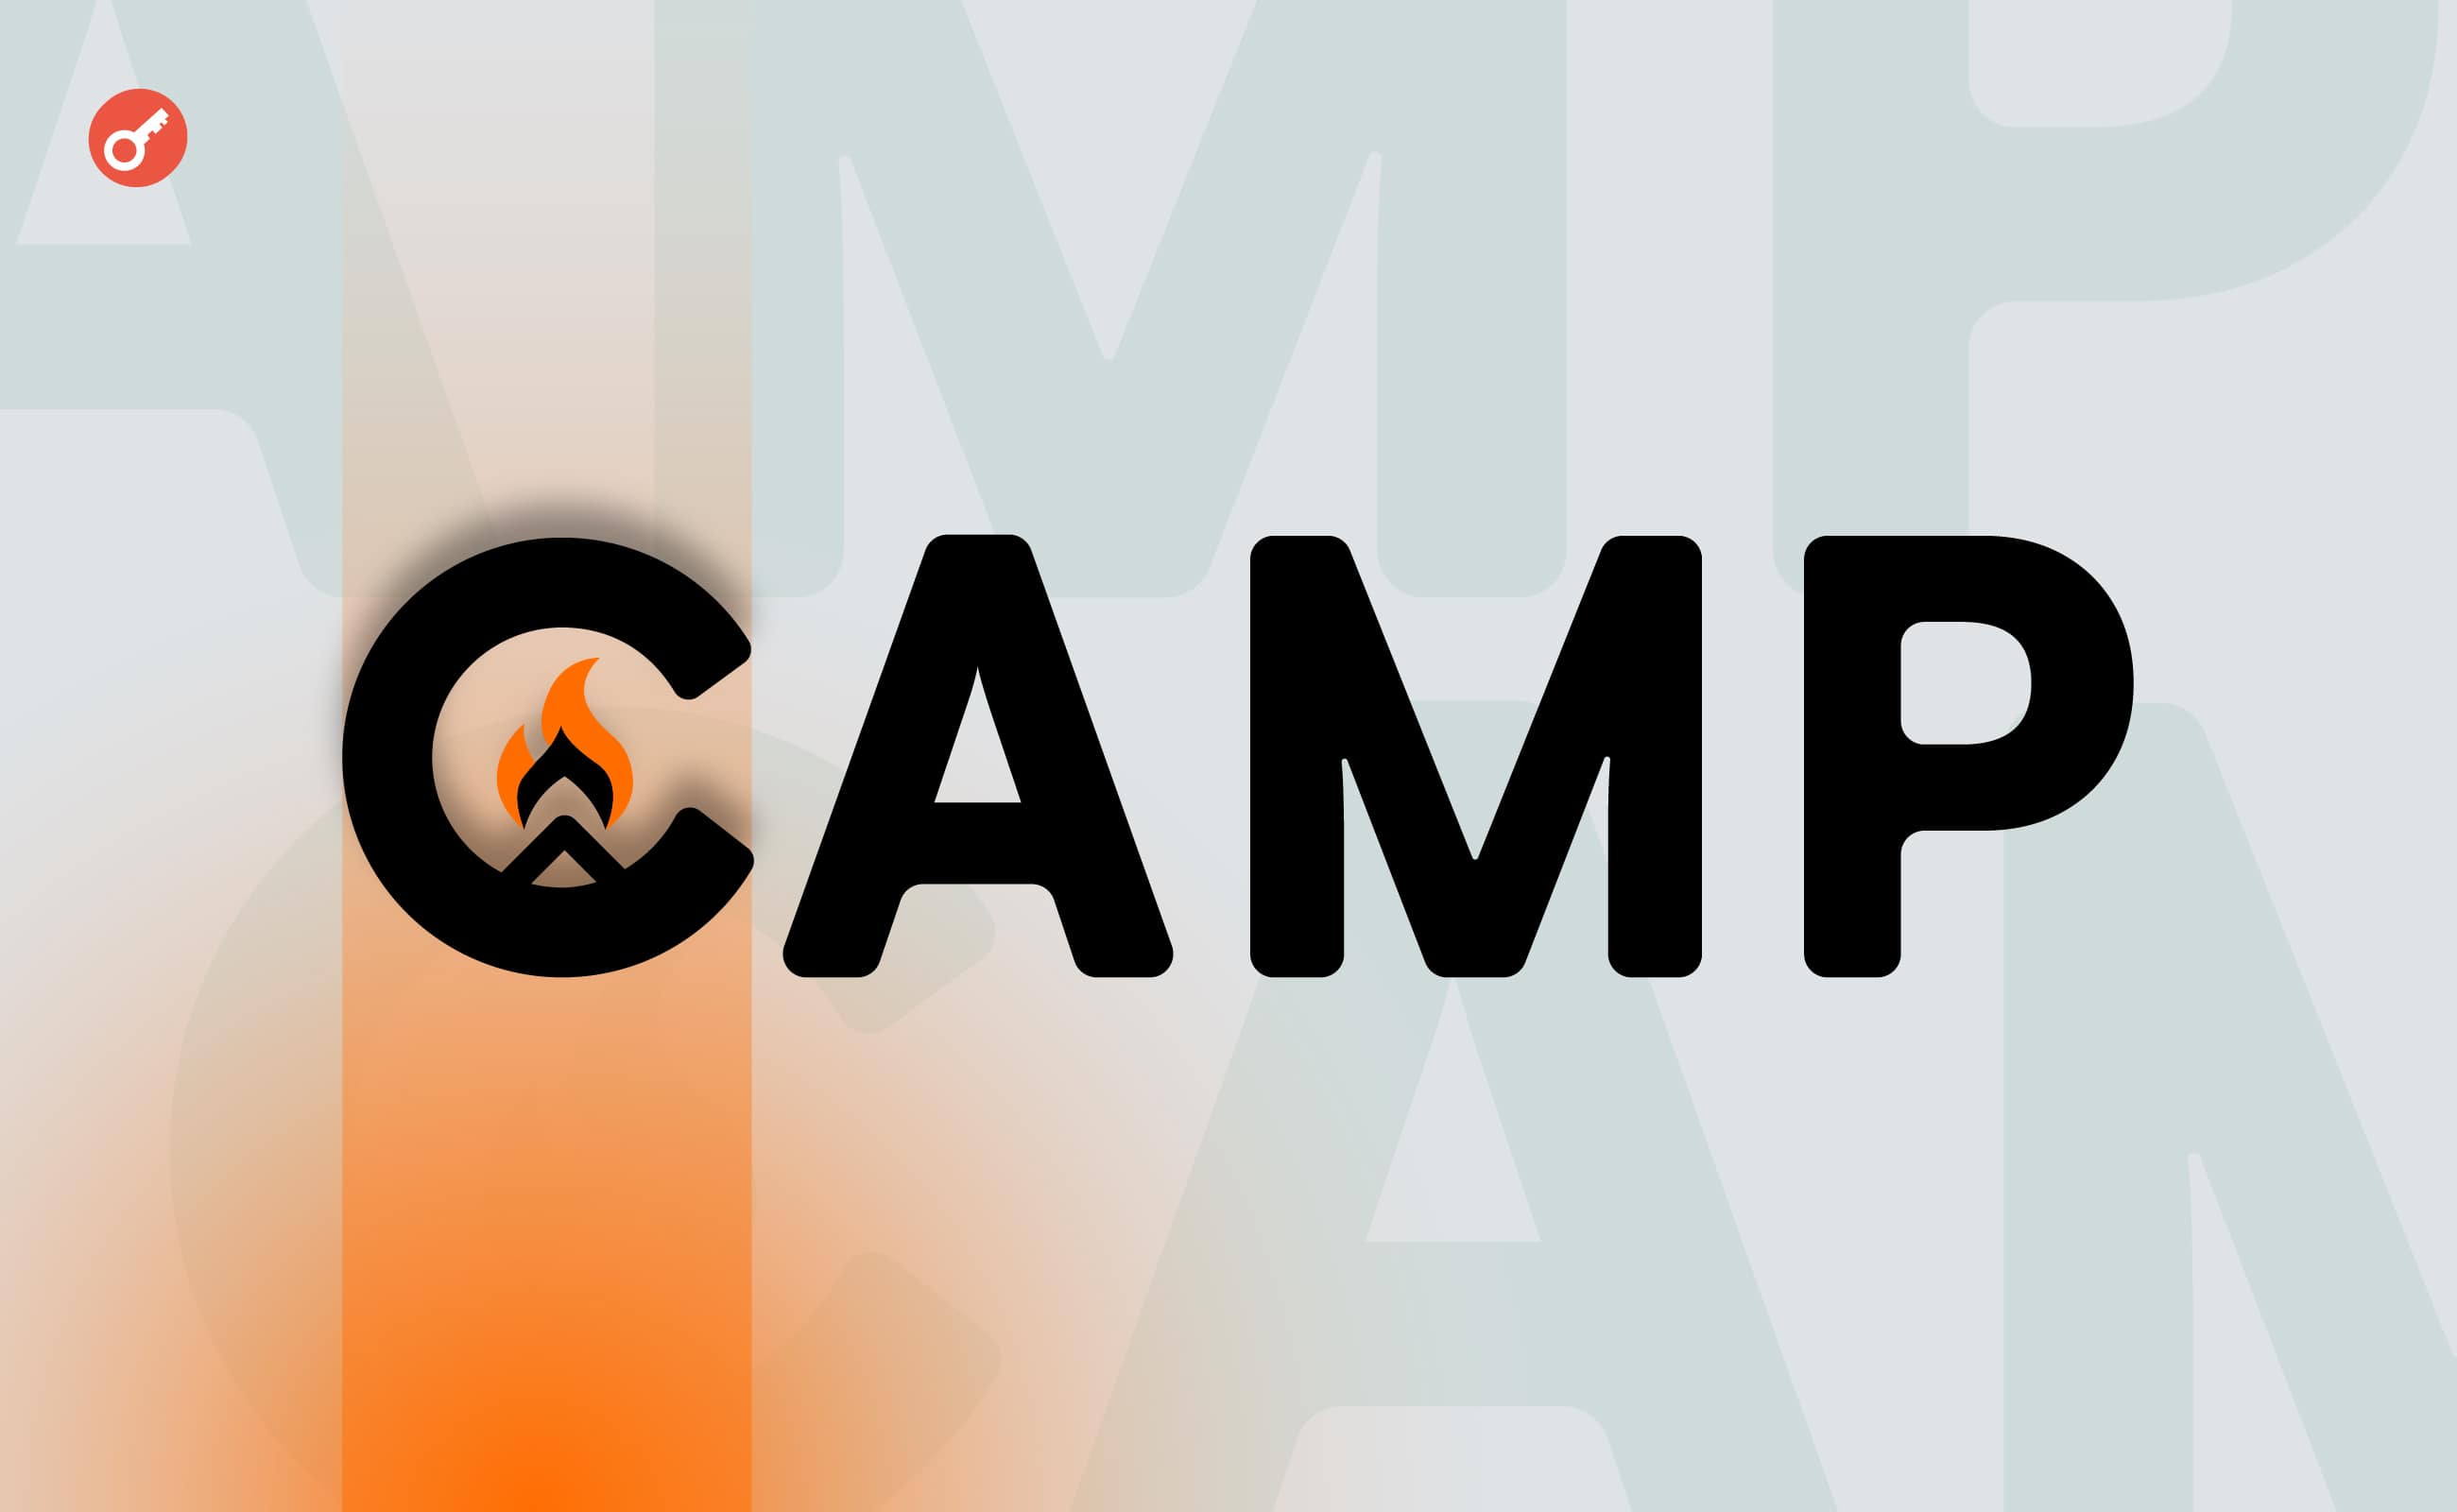 Camp Network推出一款测试网游戏：开启互动Web3体验新时代